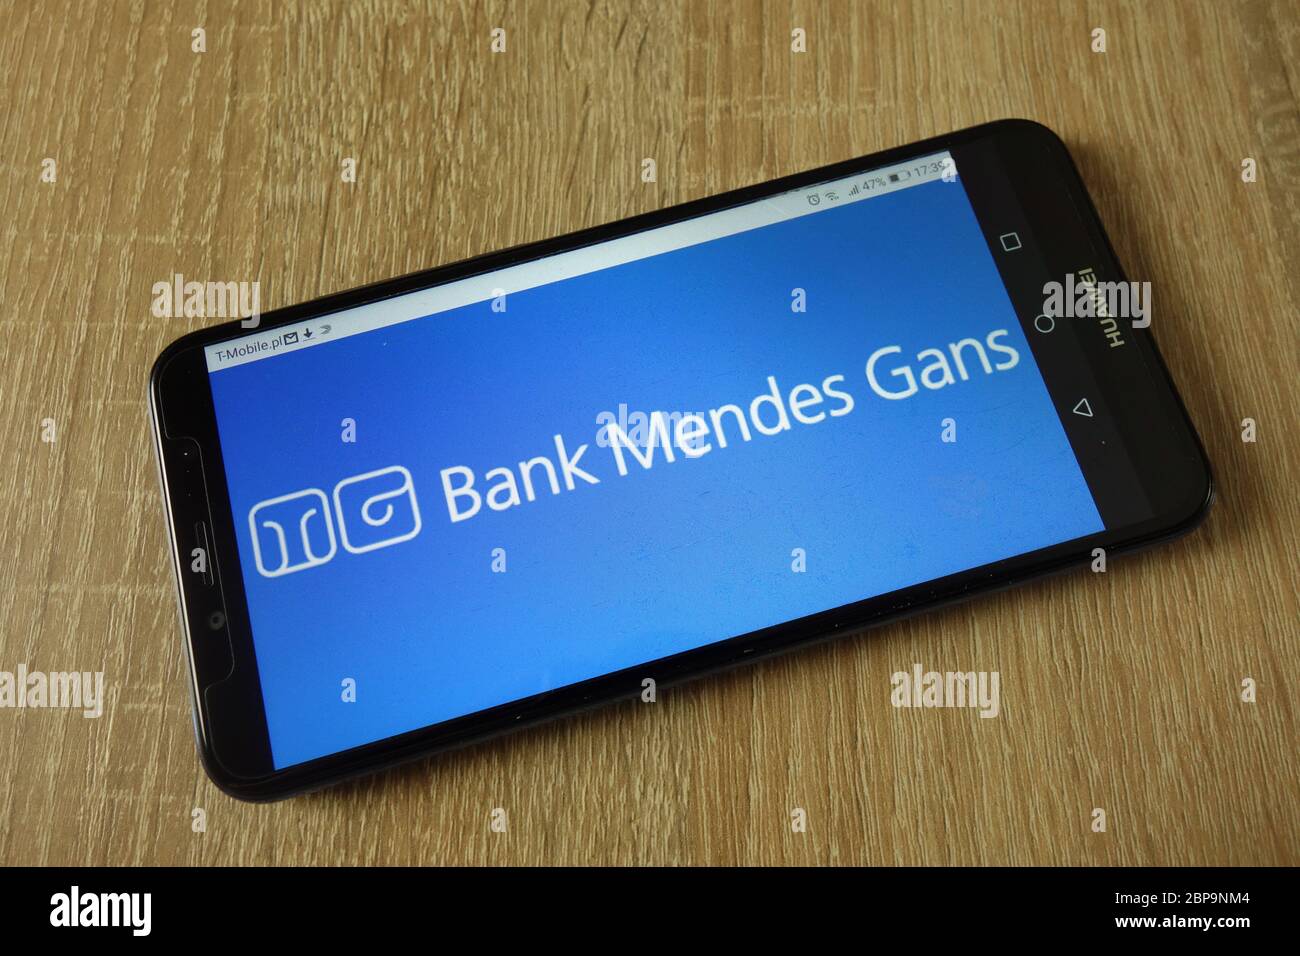 Bank Mendes Gans (BMG) logo displayed on smartphone Stock Photo